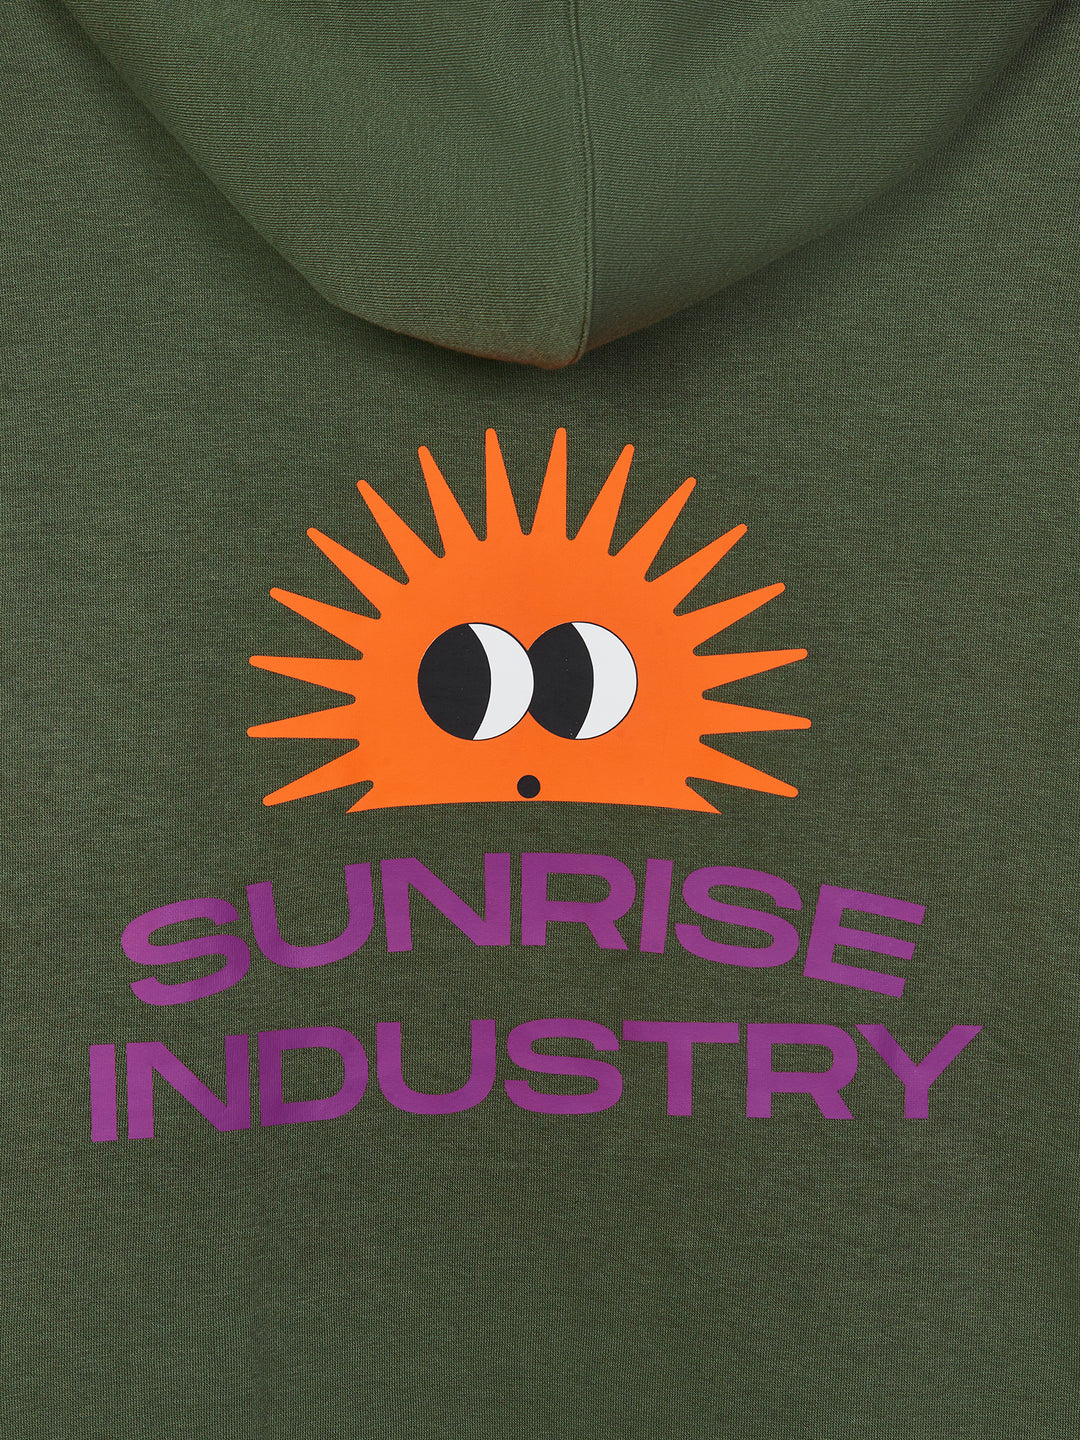 Sunrise Sweatshirt